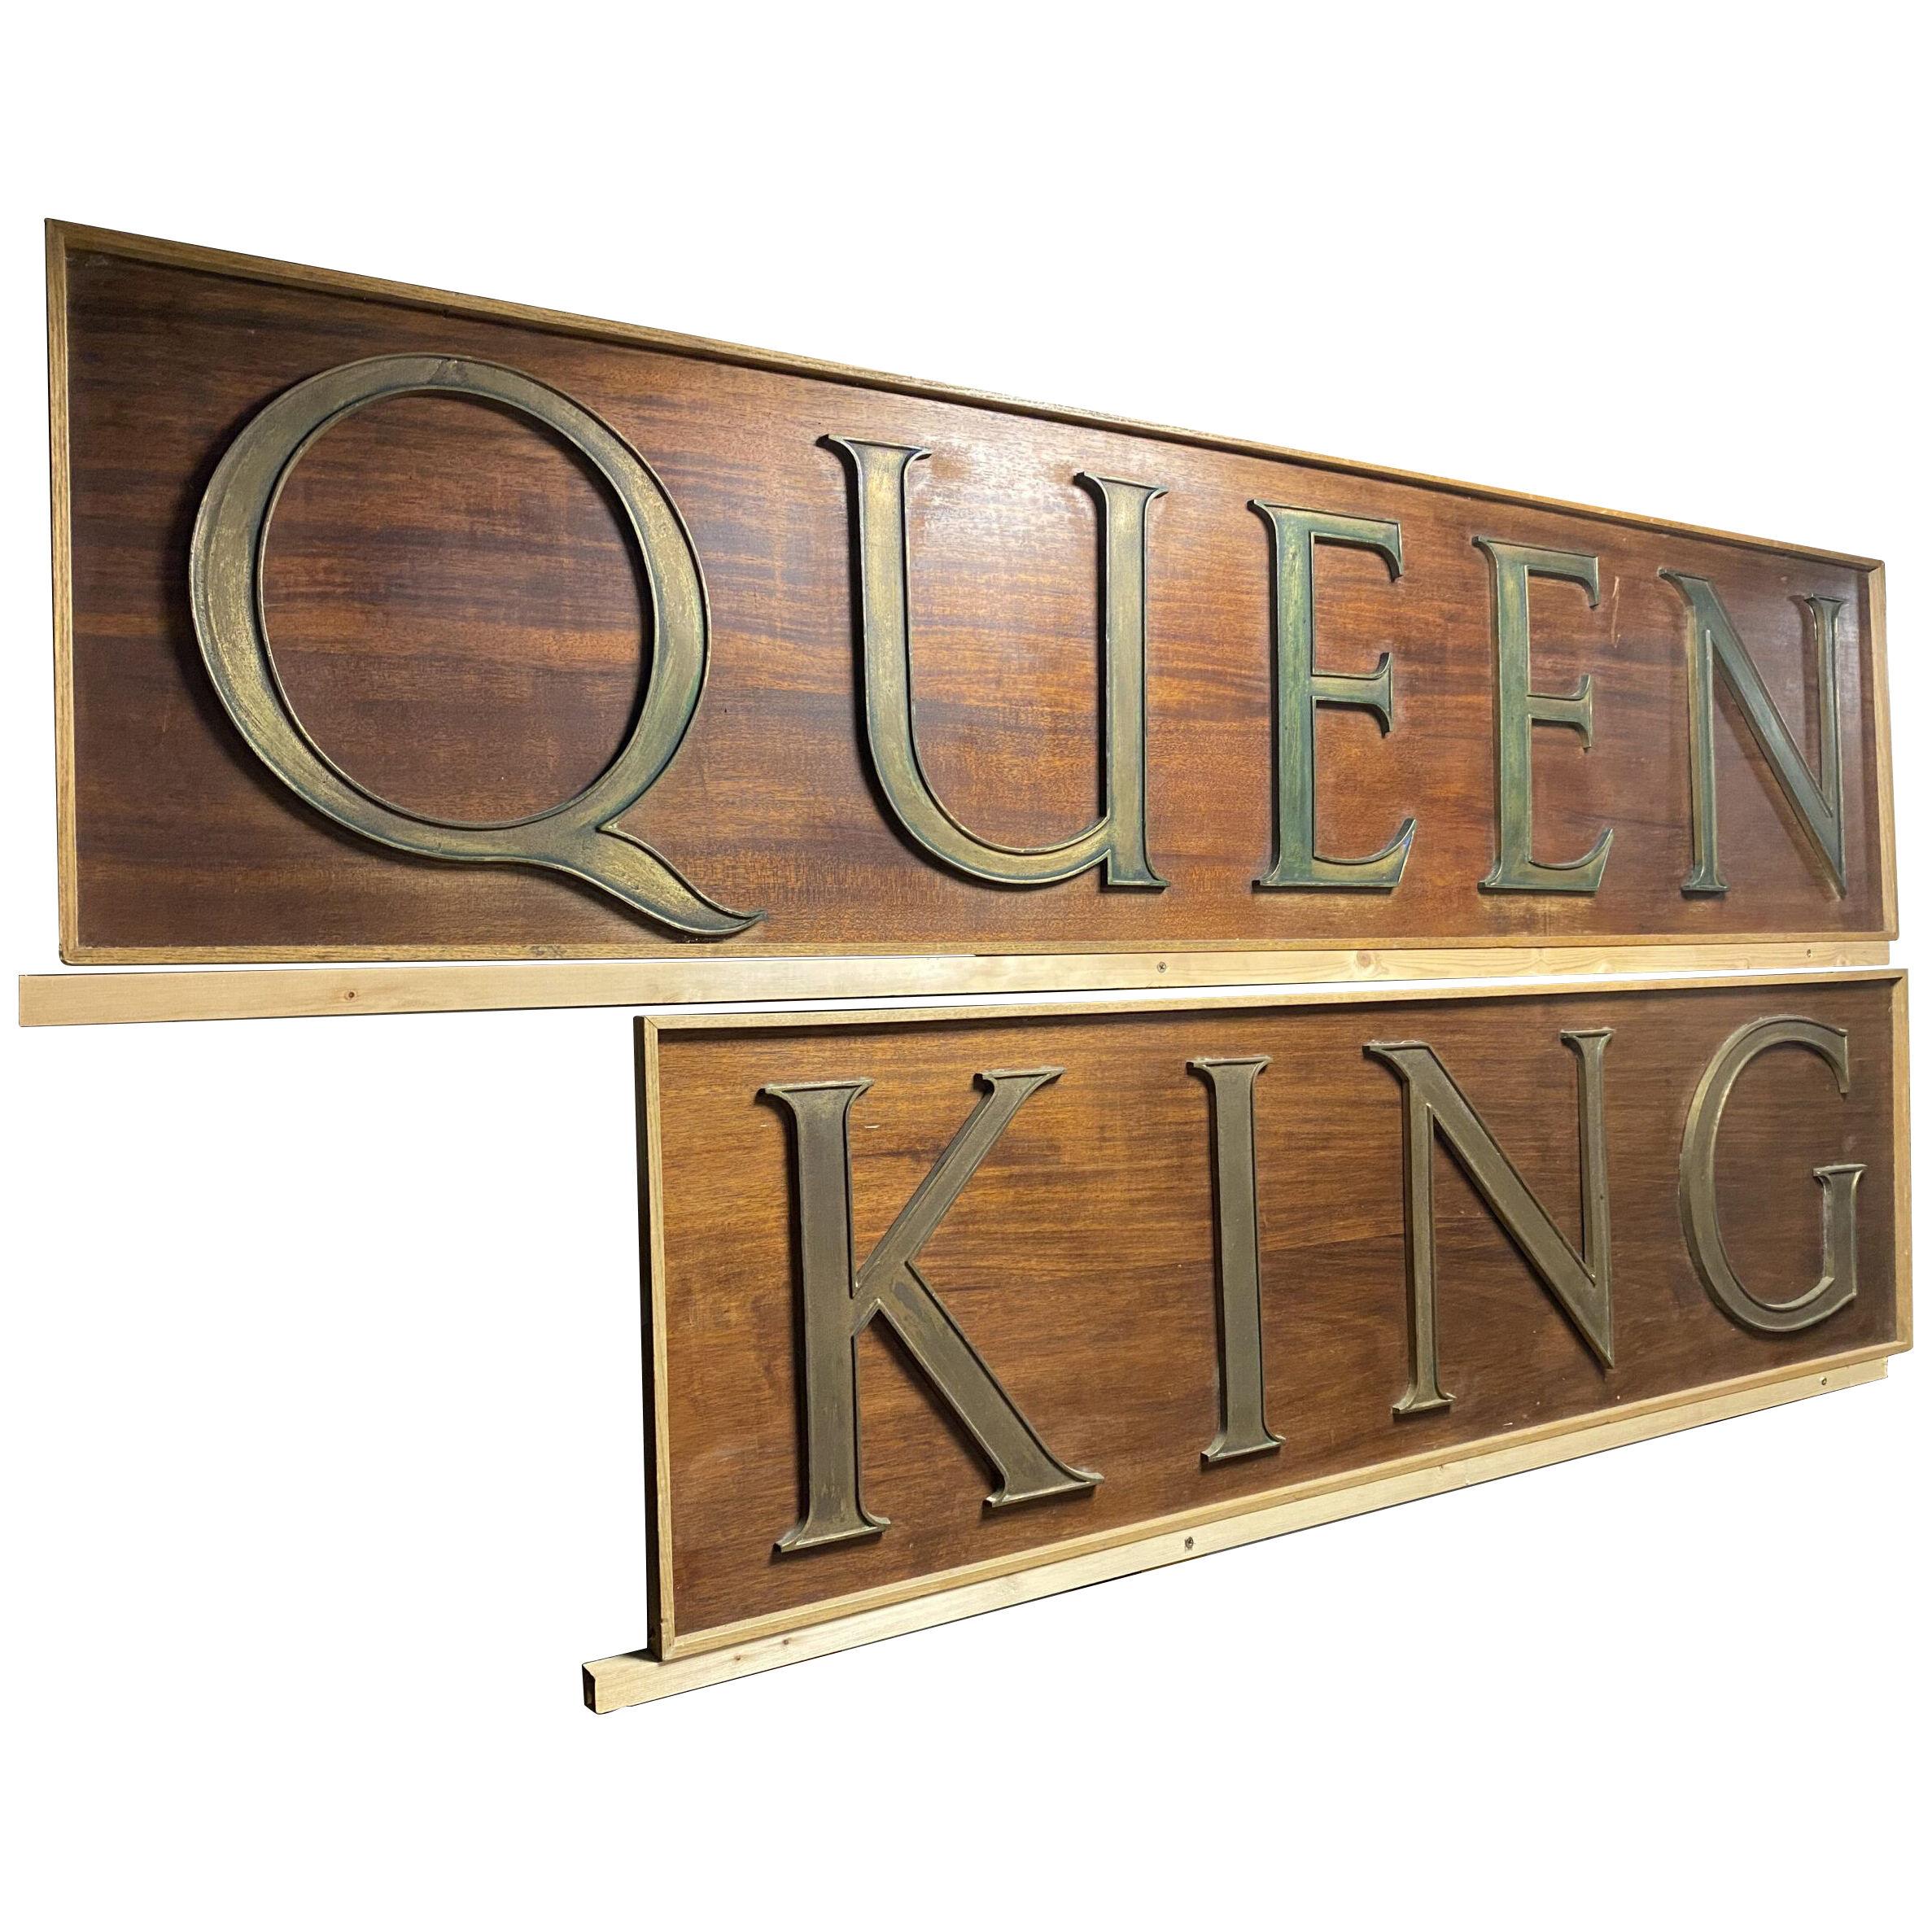 Large ‘King’ Wall Hanging Sign